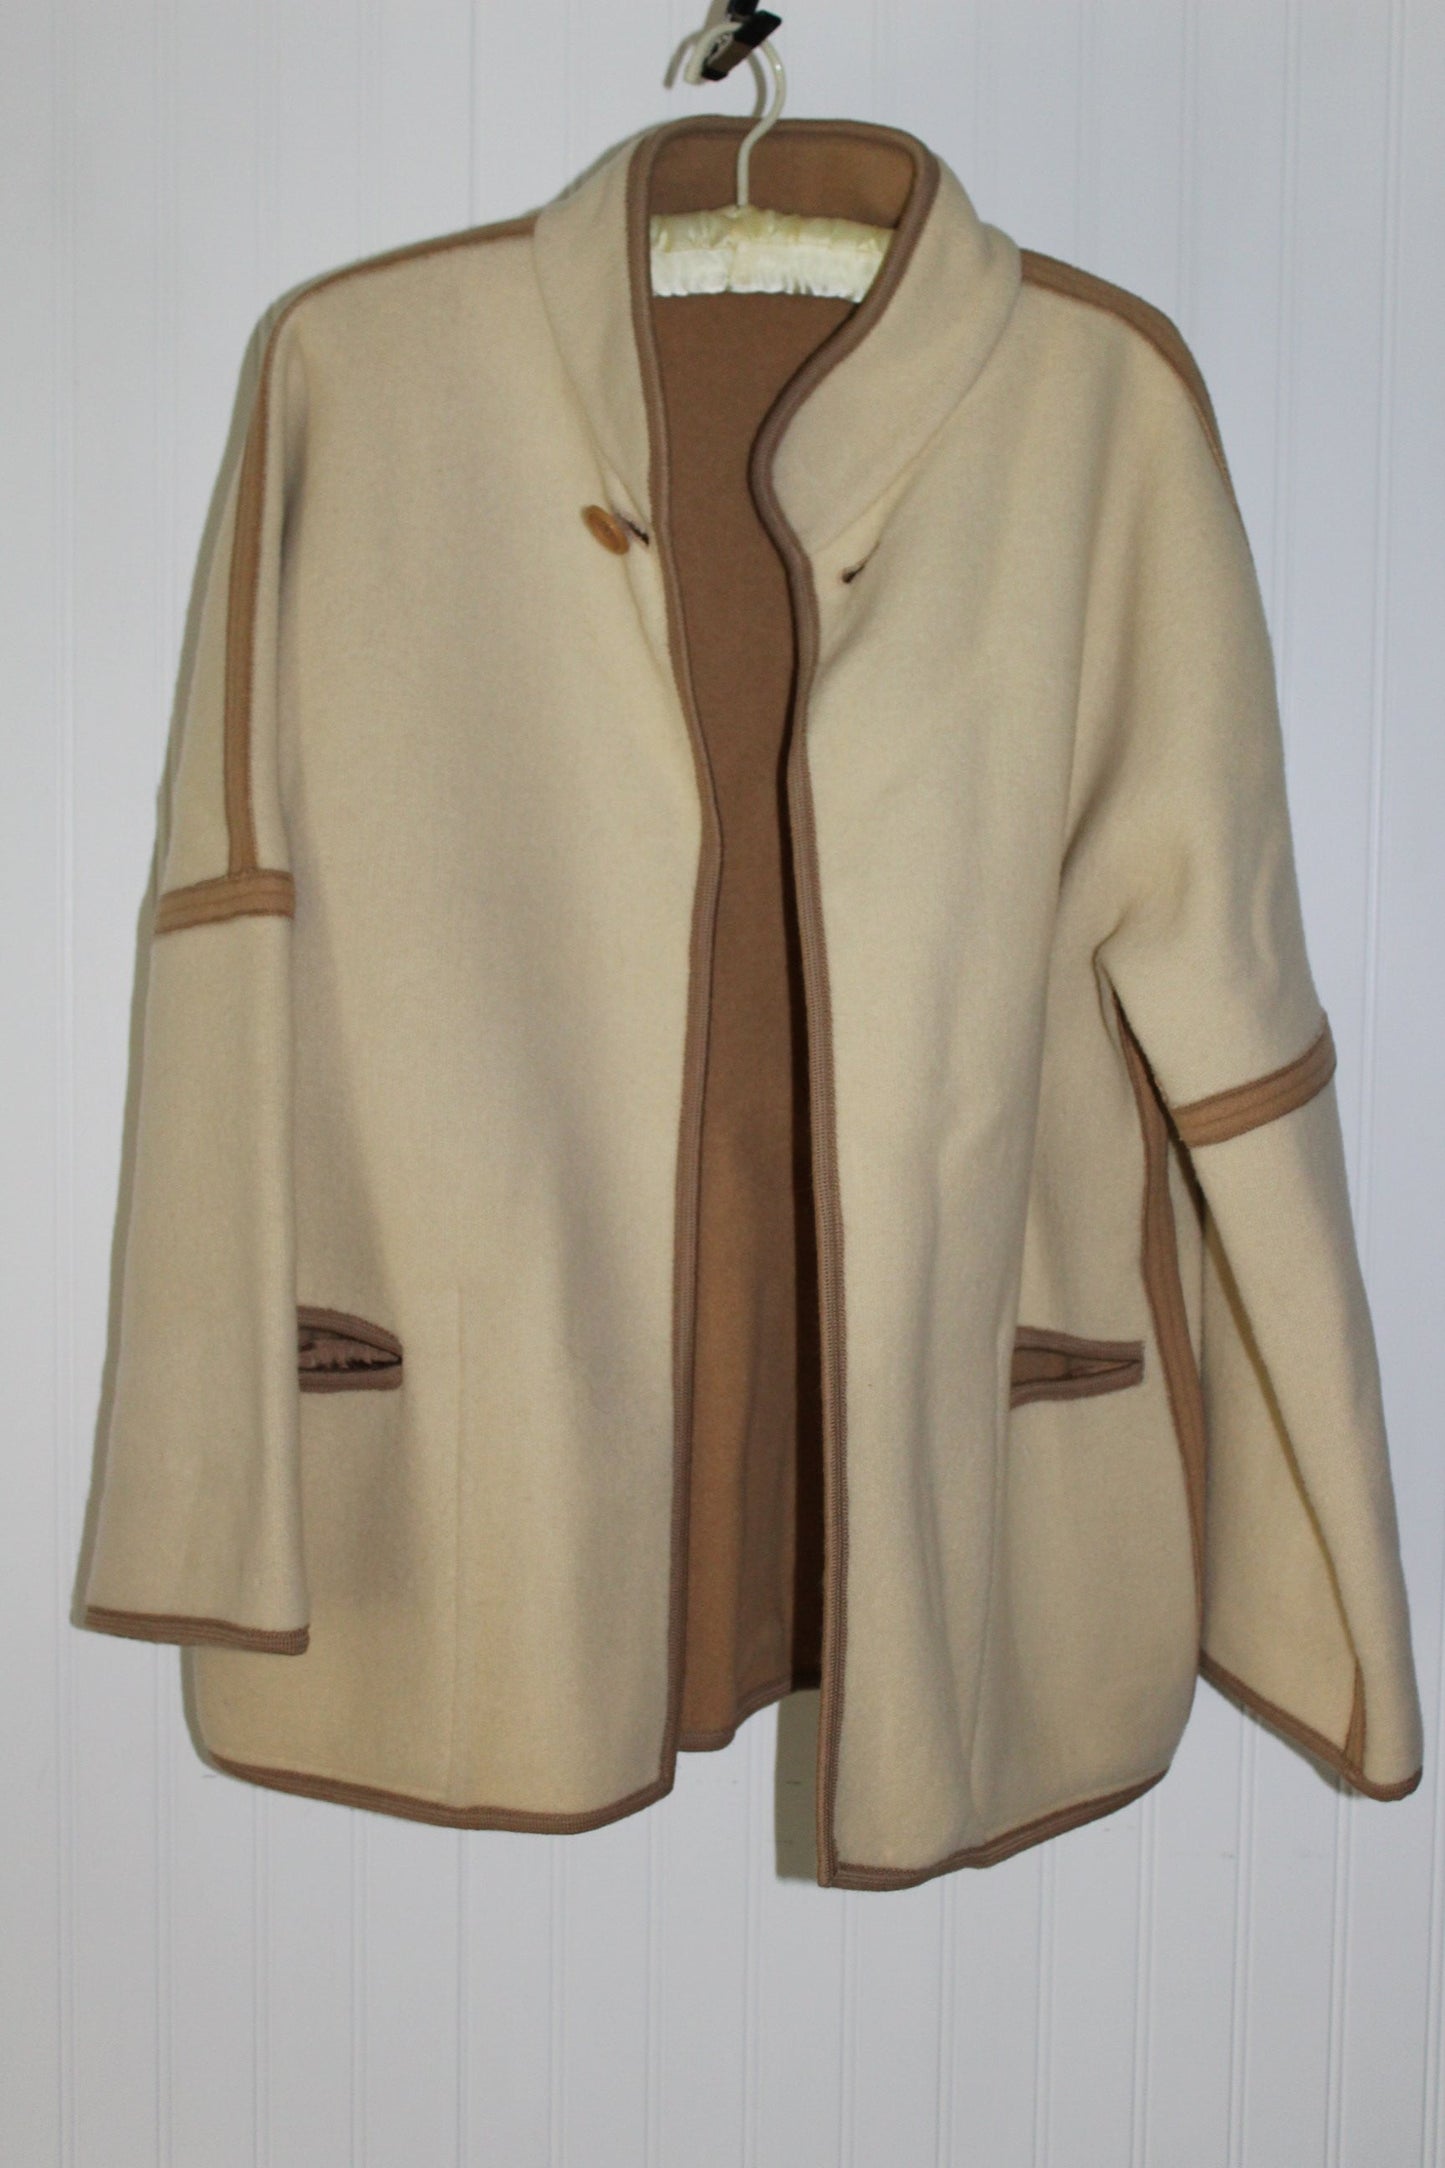 Cuddlecoat Turnaround Jacket Reversible Wool Cream Tan Medium Fits like Large